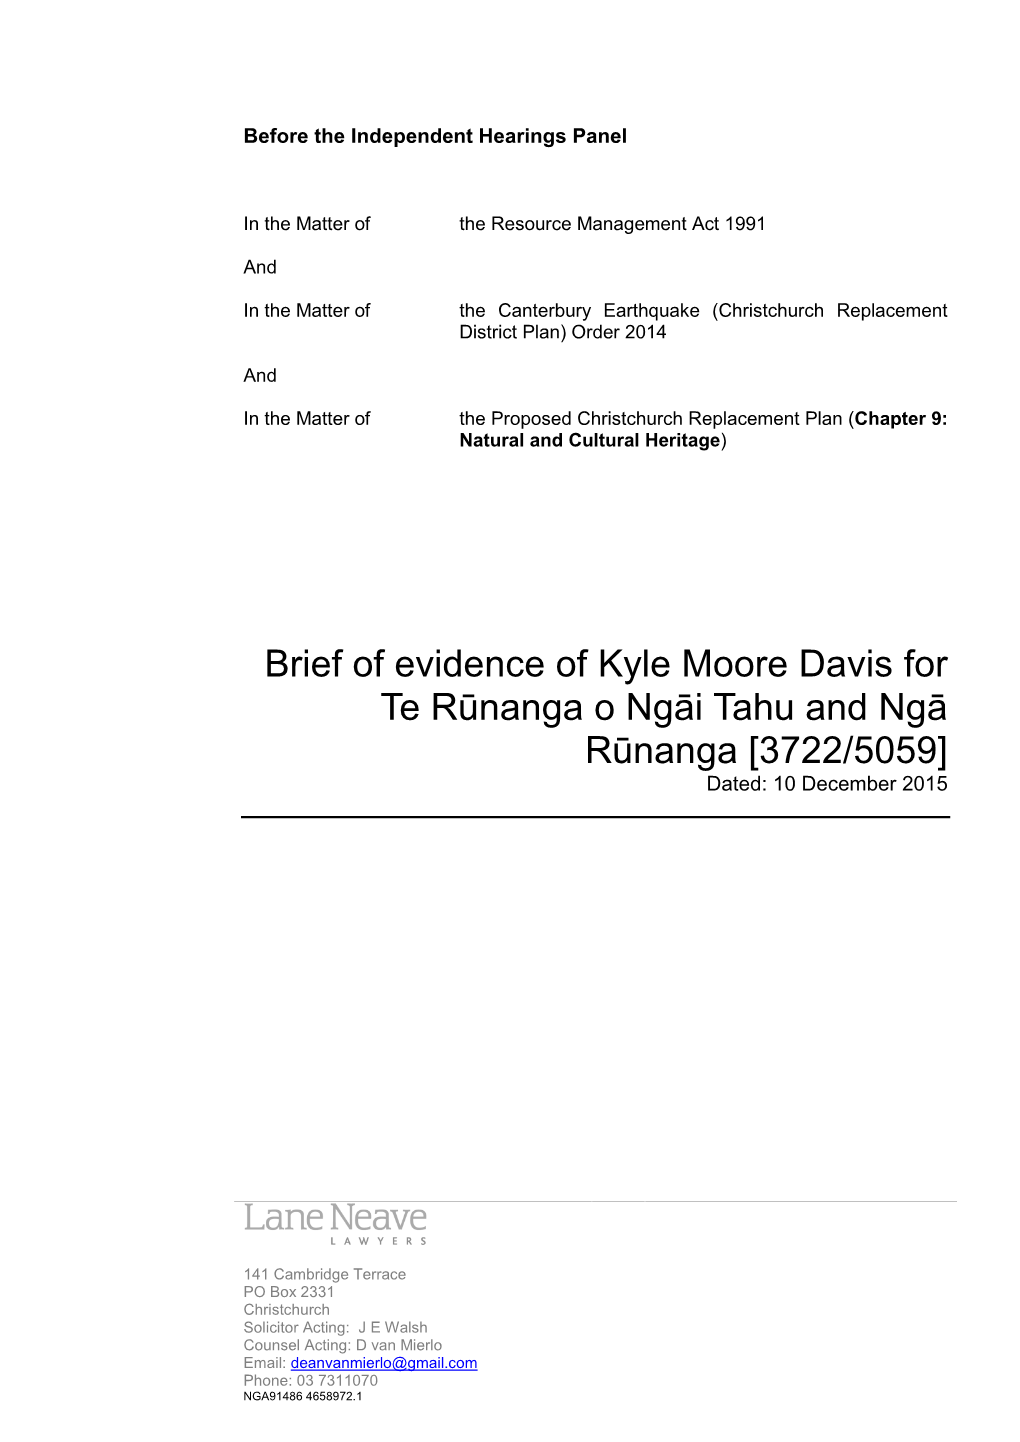 Brief of Evidence of Kyle Moore Davis for Te Rūnanga O Ngāi Tahu and Ngā Rūnanga [3722/5059] Dated: 10 December 2015